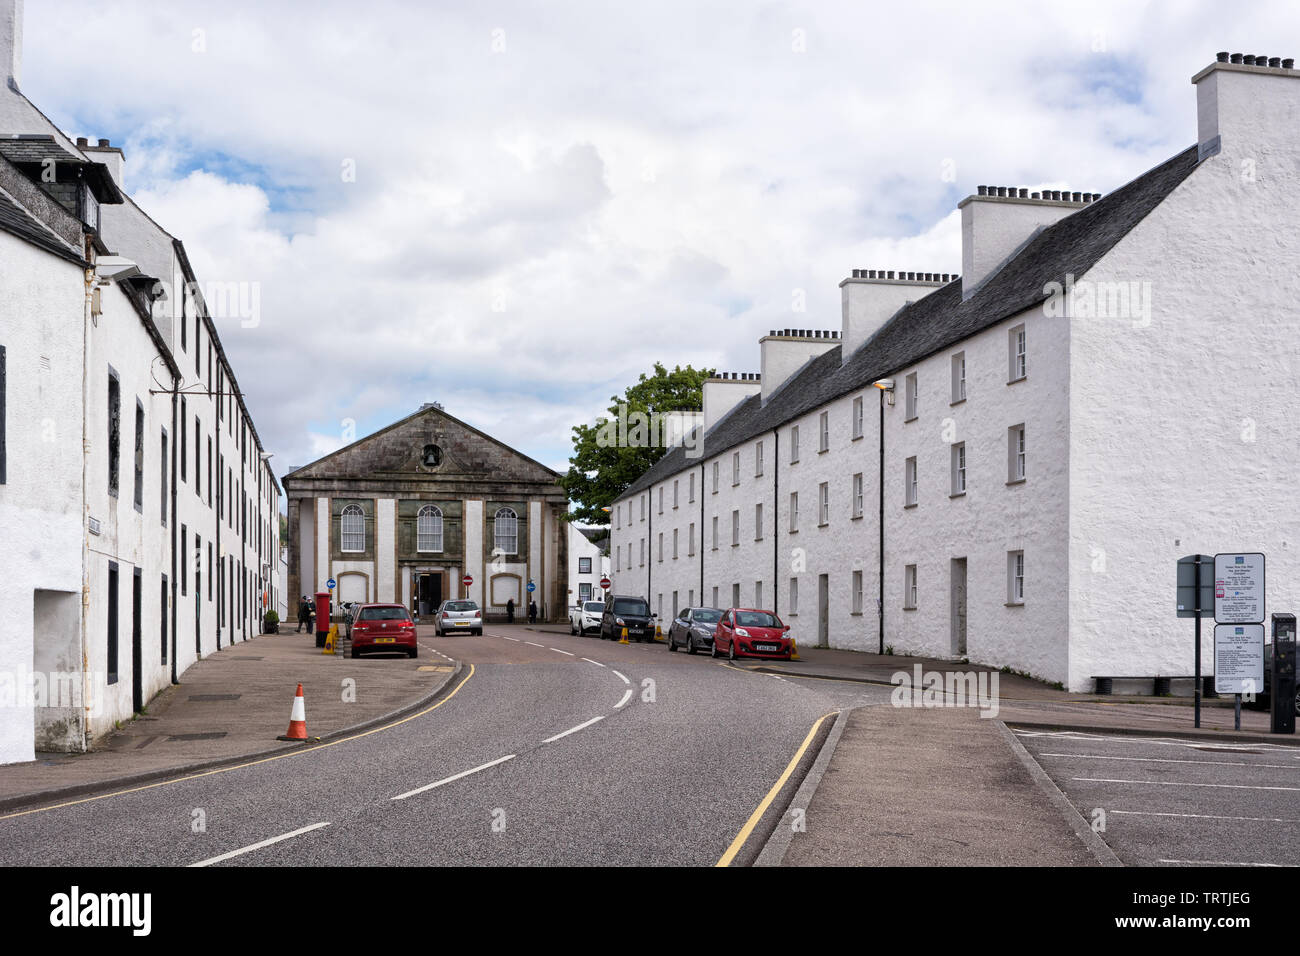 Inveraray, Scotland, UK - May 06, 2019: Main street of Inveraray, a town on Loch Fyne in Argyll and Bute, Scotland. Stock Photo